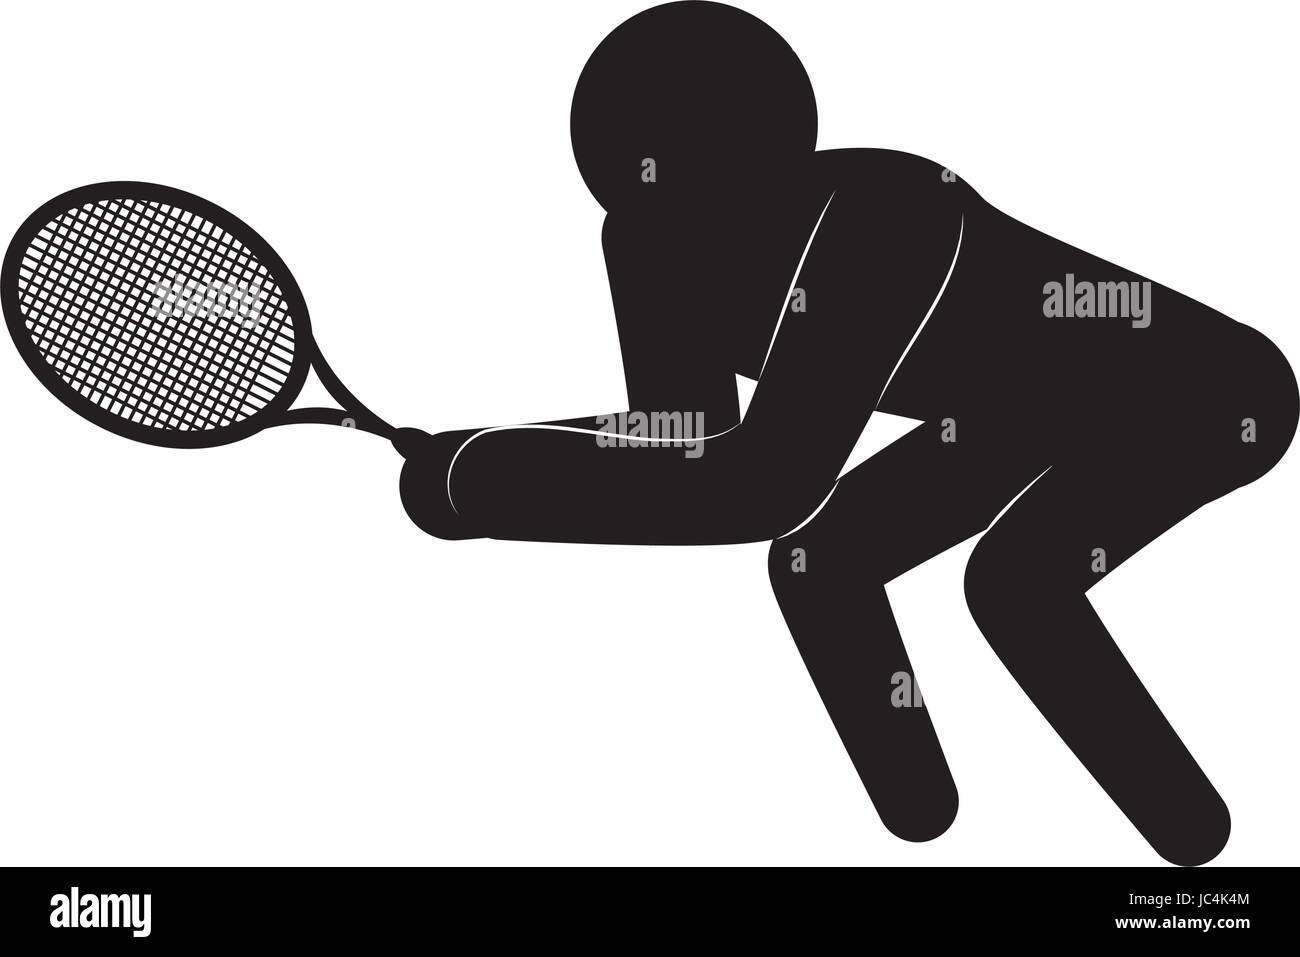 Tennis Spieler Piktogramm Stock Vektorgrafik Alamy